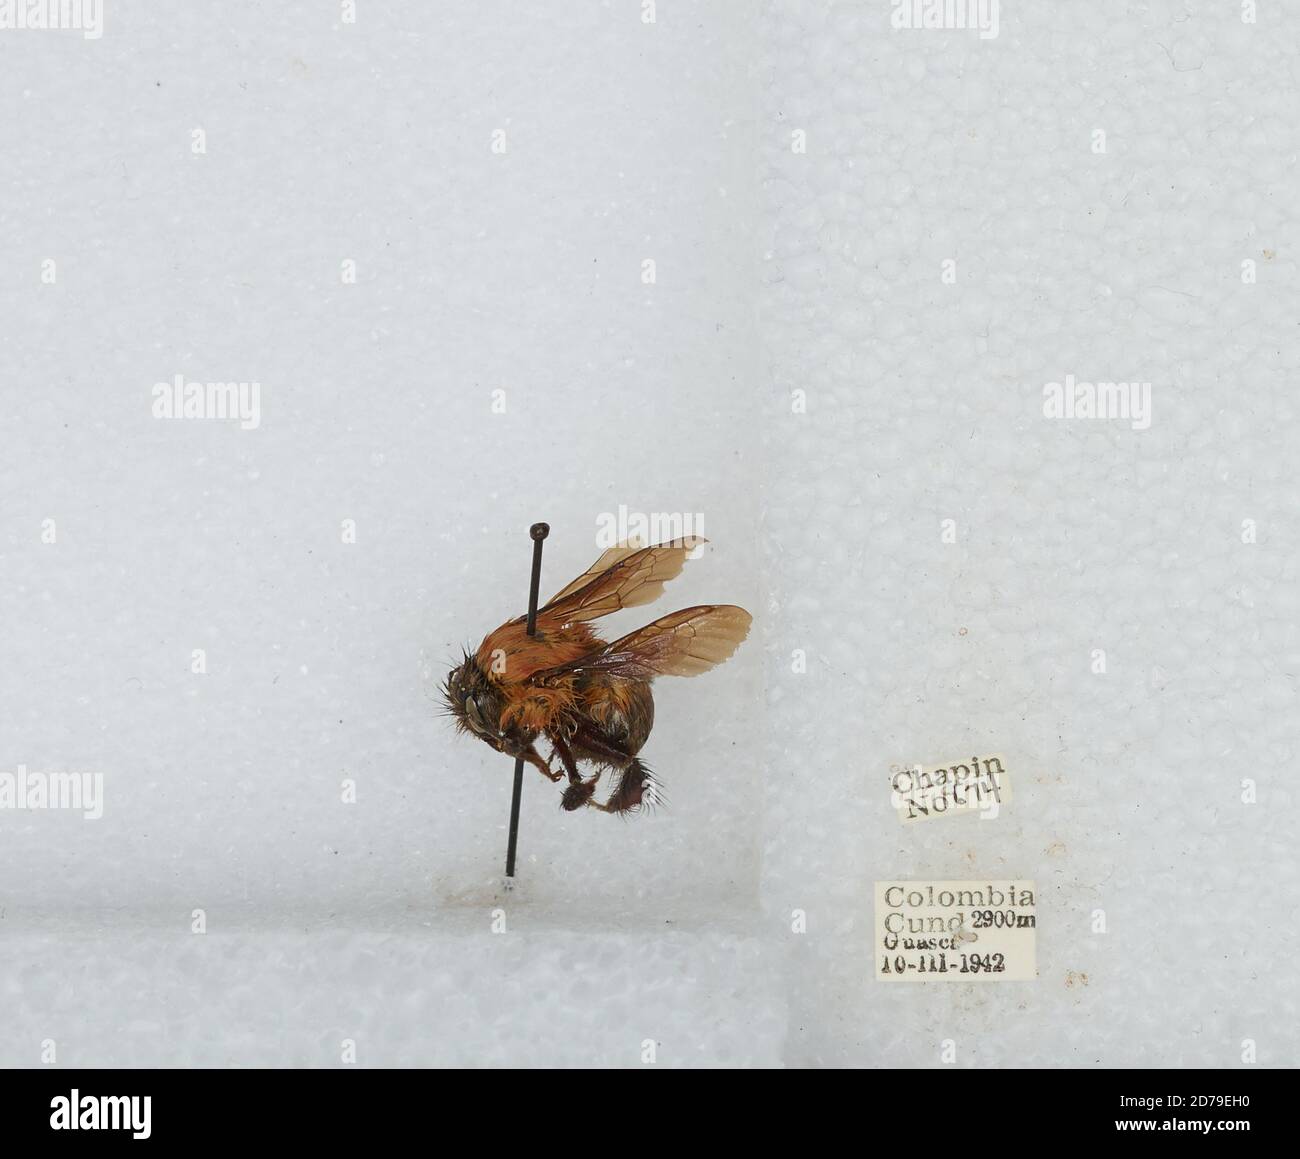 Guasca, Cundinamarca, Colombia, Bombus sp., Animalia, Arthropoda, Insecta, Hymenoptera, Apidae, Apinae Stock Photo